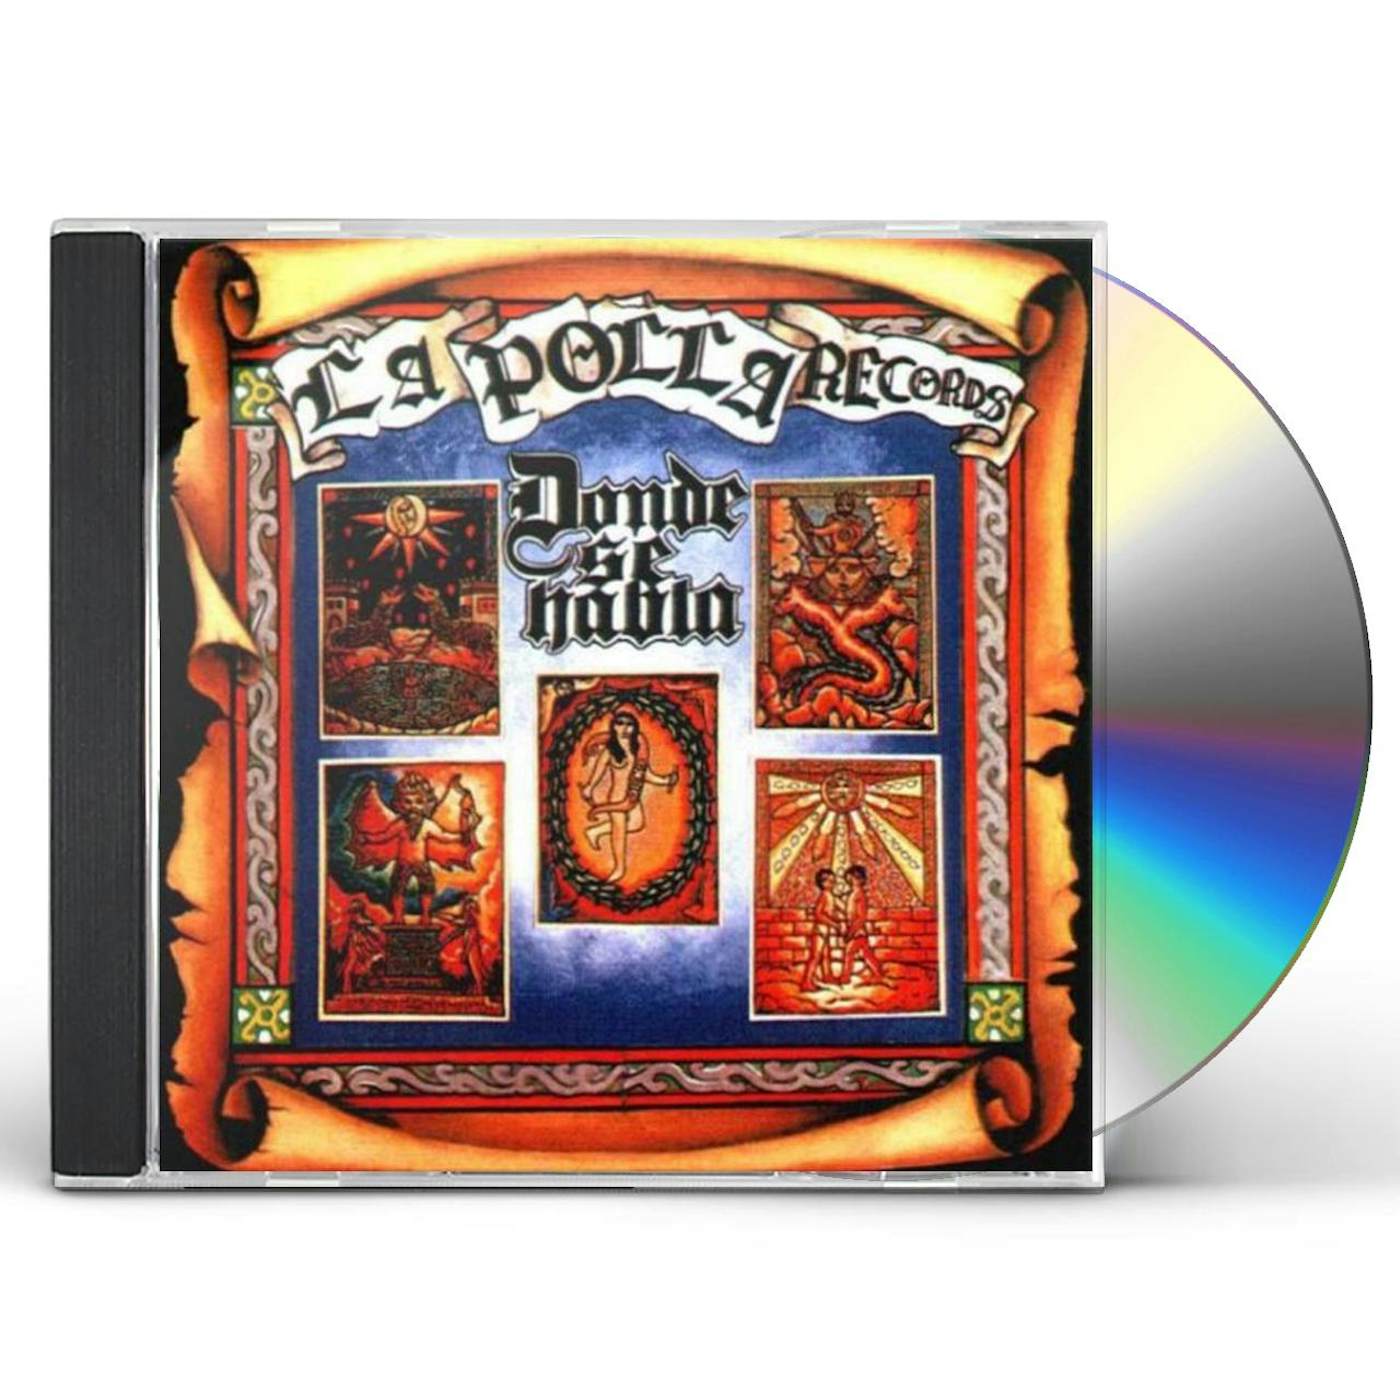 La Polla Records DONDE SE HABLA CD